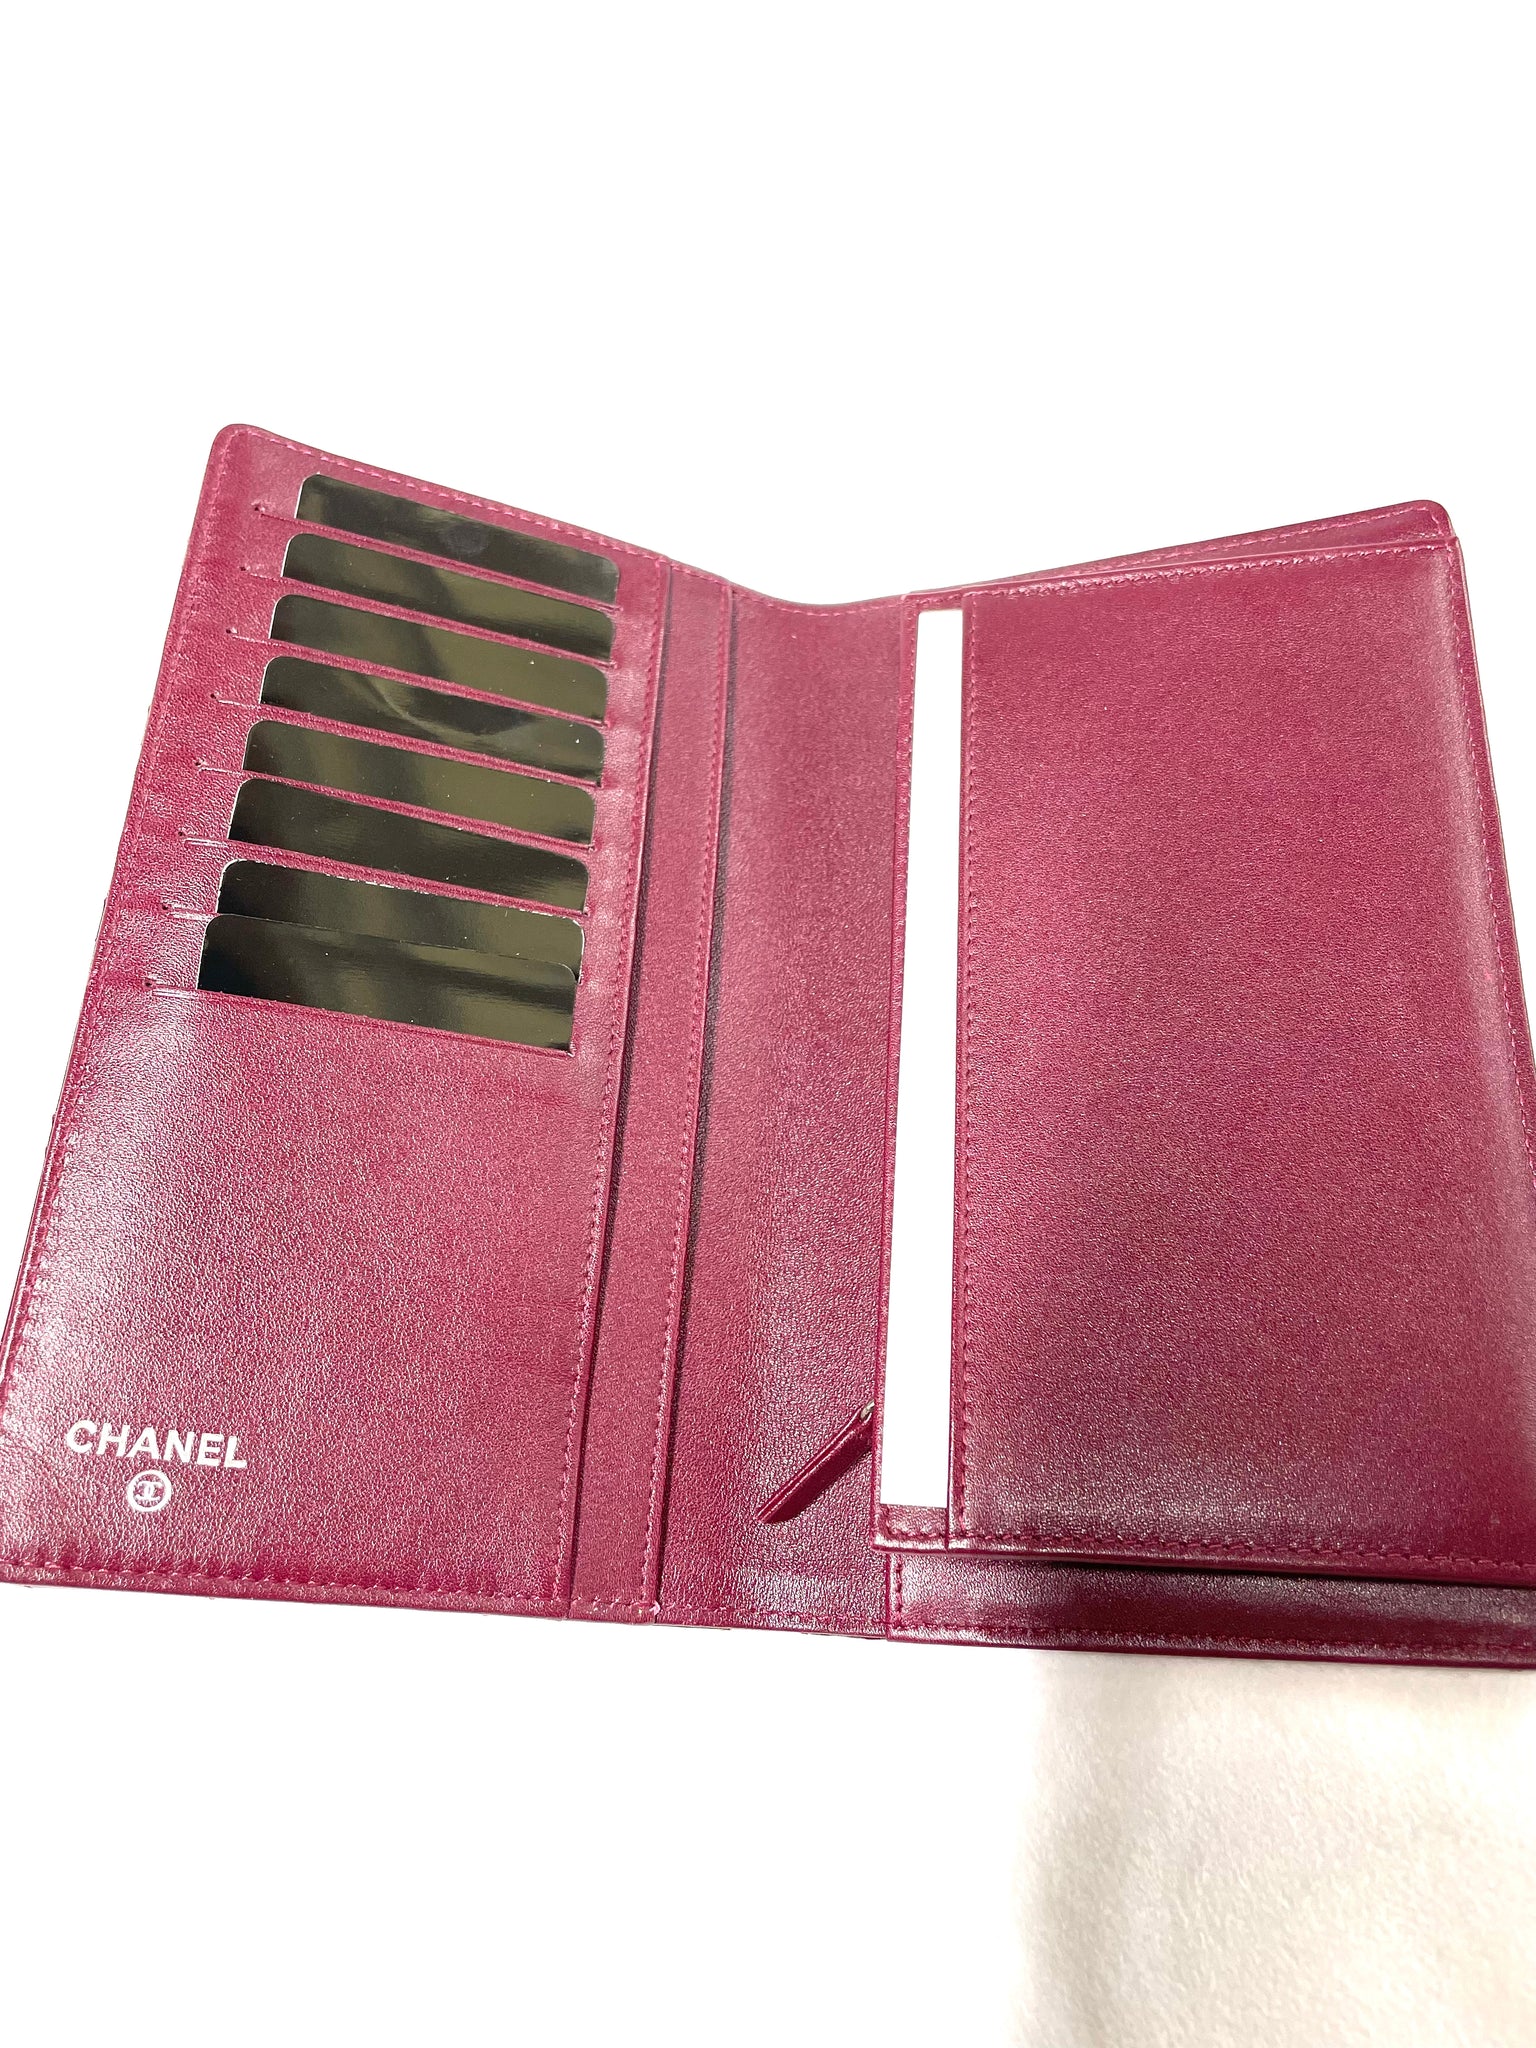 Chanel Bordeaux Patent Wallet *brand new*